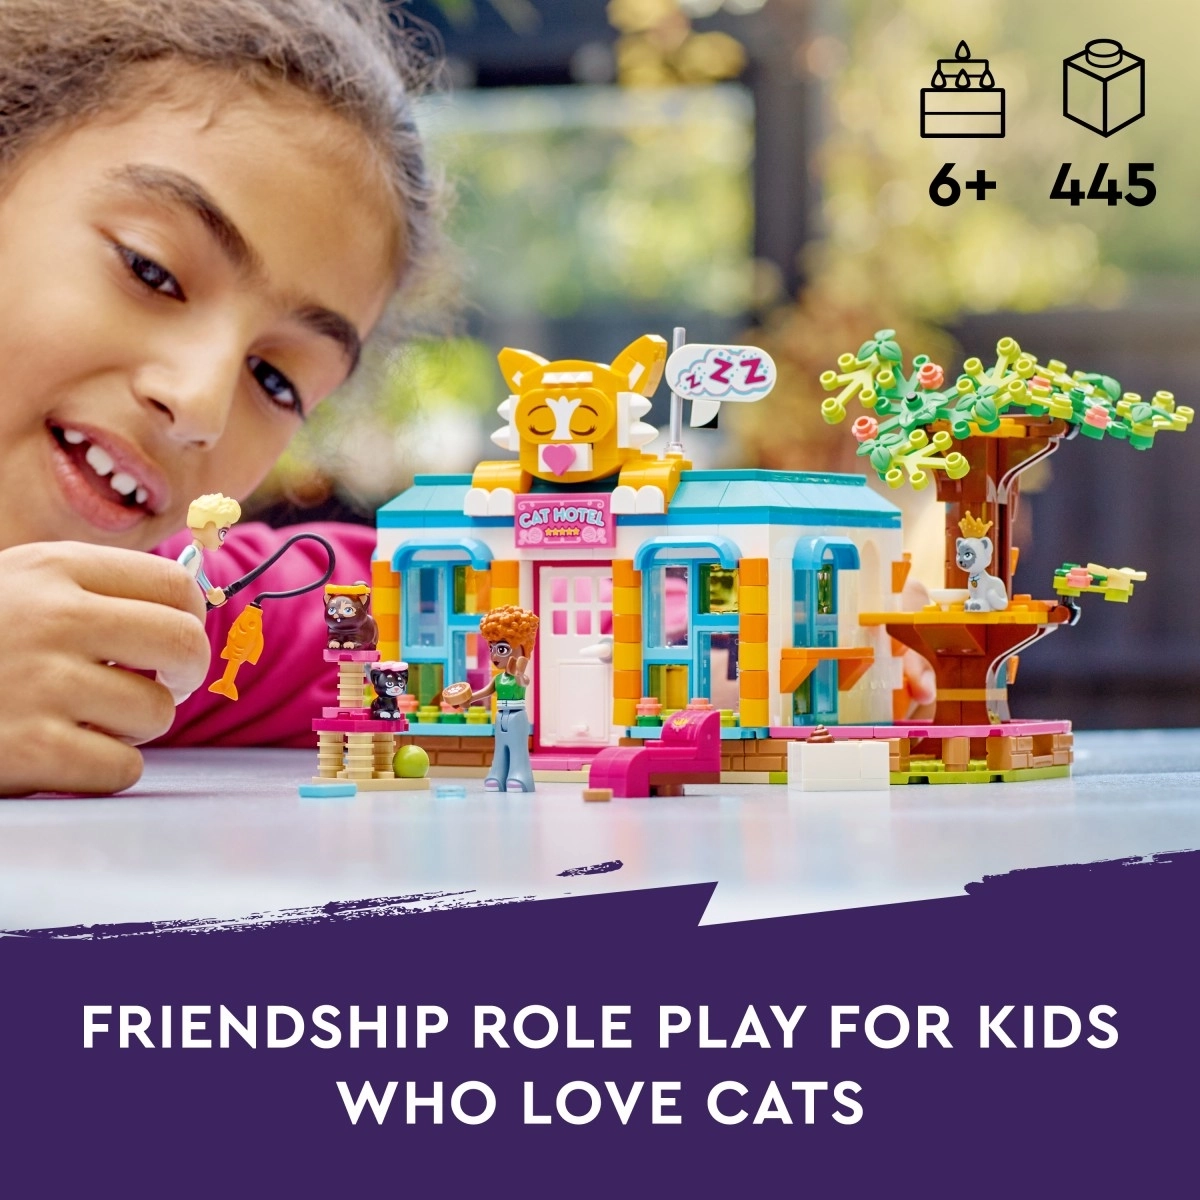 LEGO Cat Hotel Block Building Toys for Kids, Multicolour, 6Y+